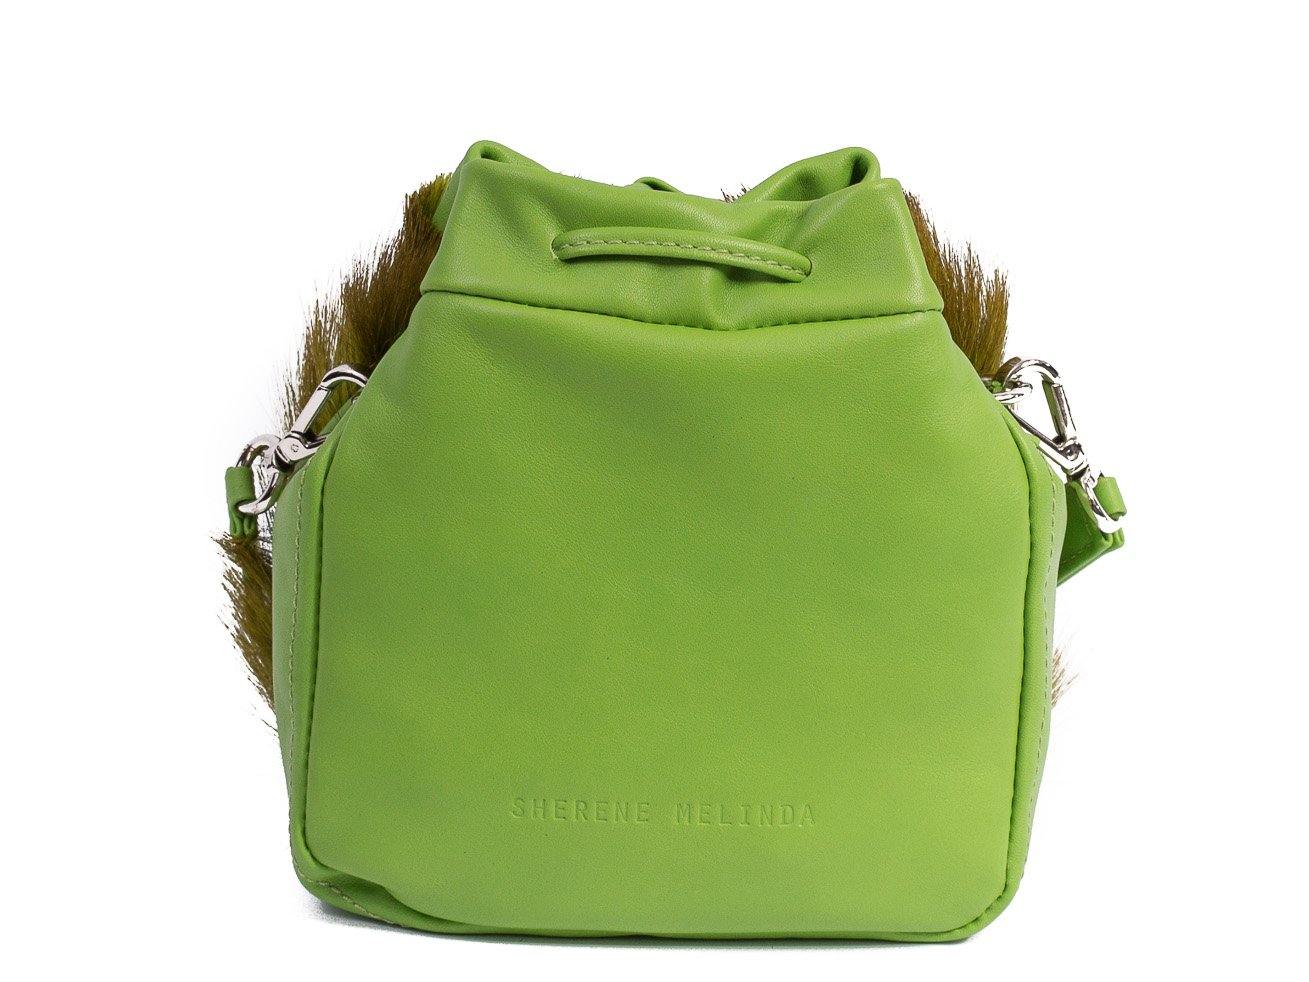 sherene melinda springbok hair-on-hide lime green leather pouch bag back